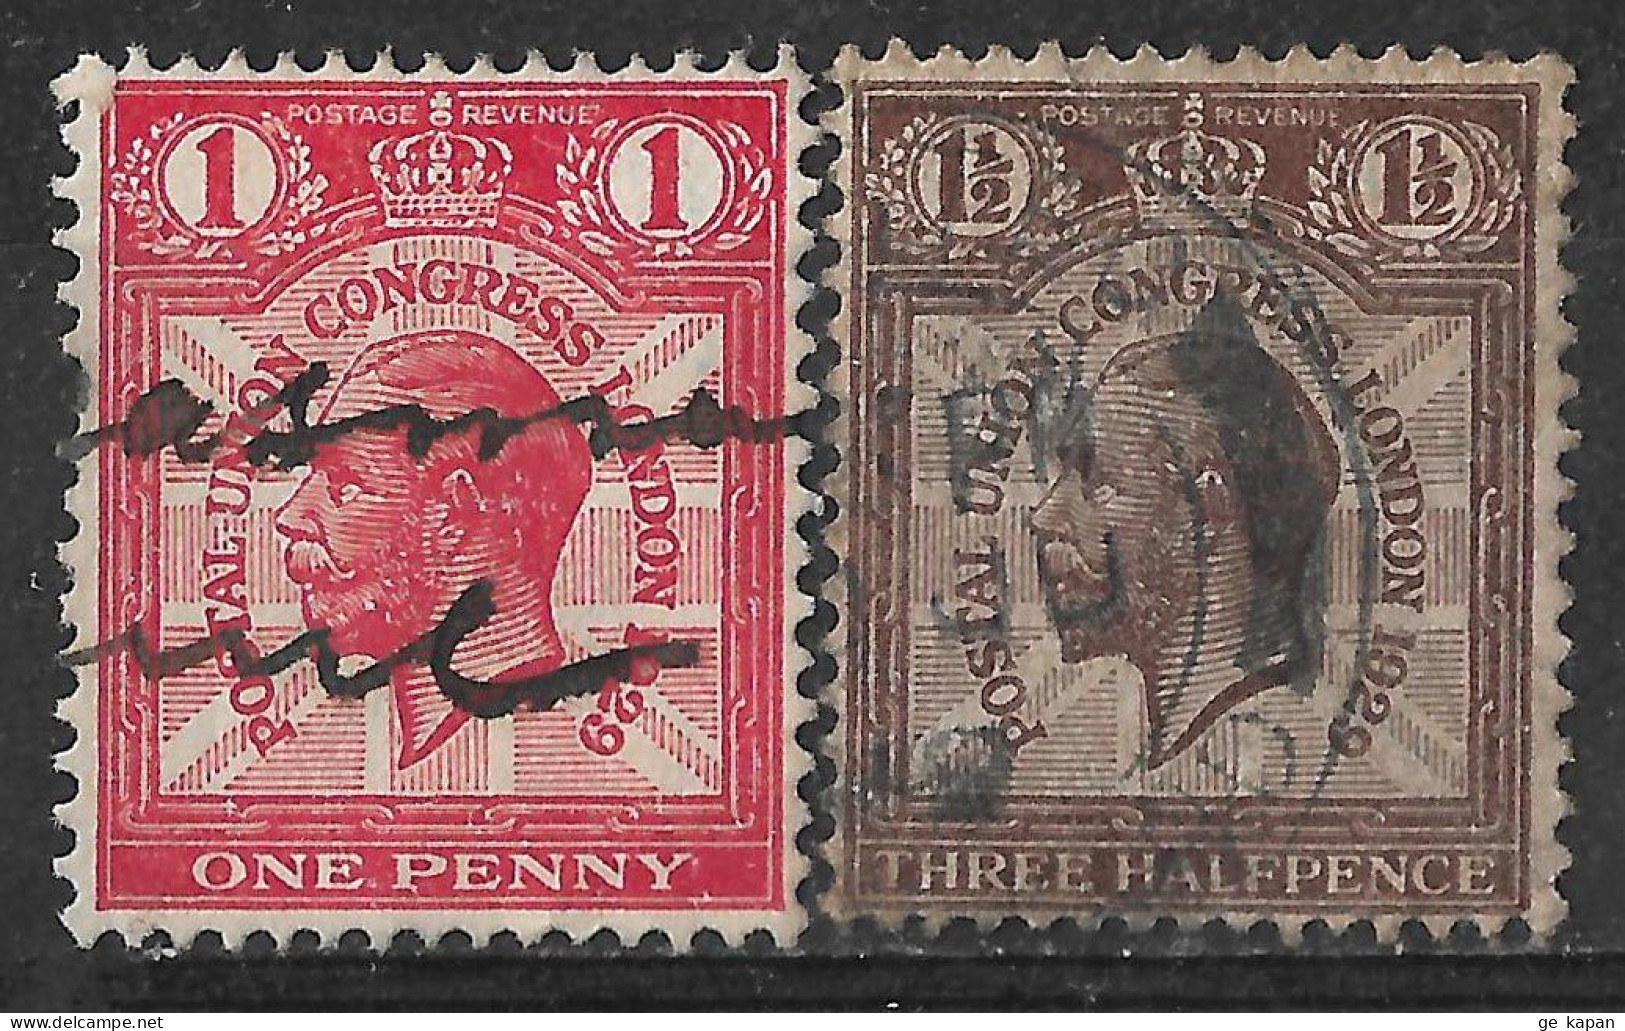 1929 GREAT BRITAIN Set Of 2 Used Stamps (Scott # 206,207) CV $4.50 - Oblitérés